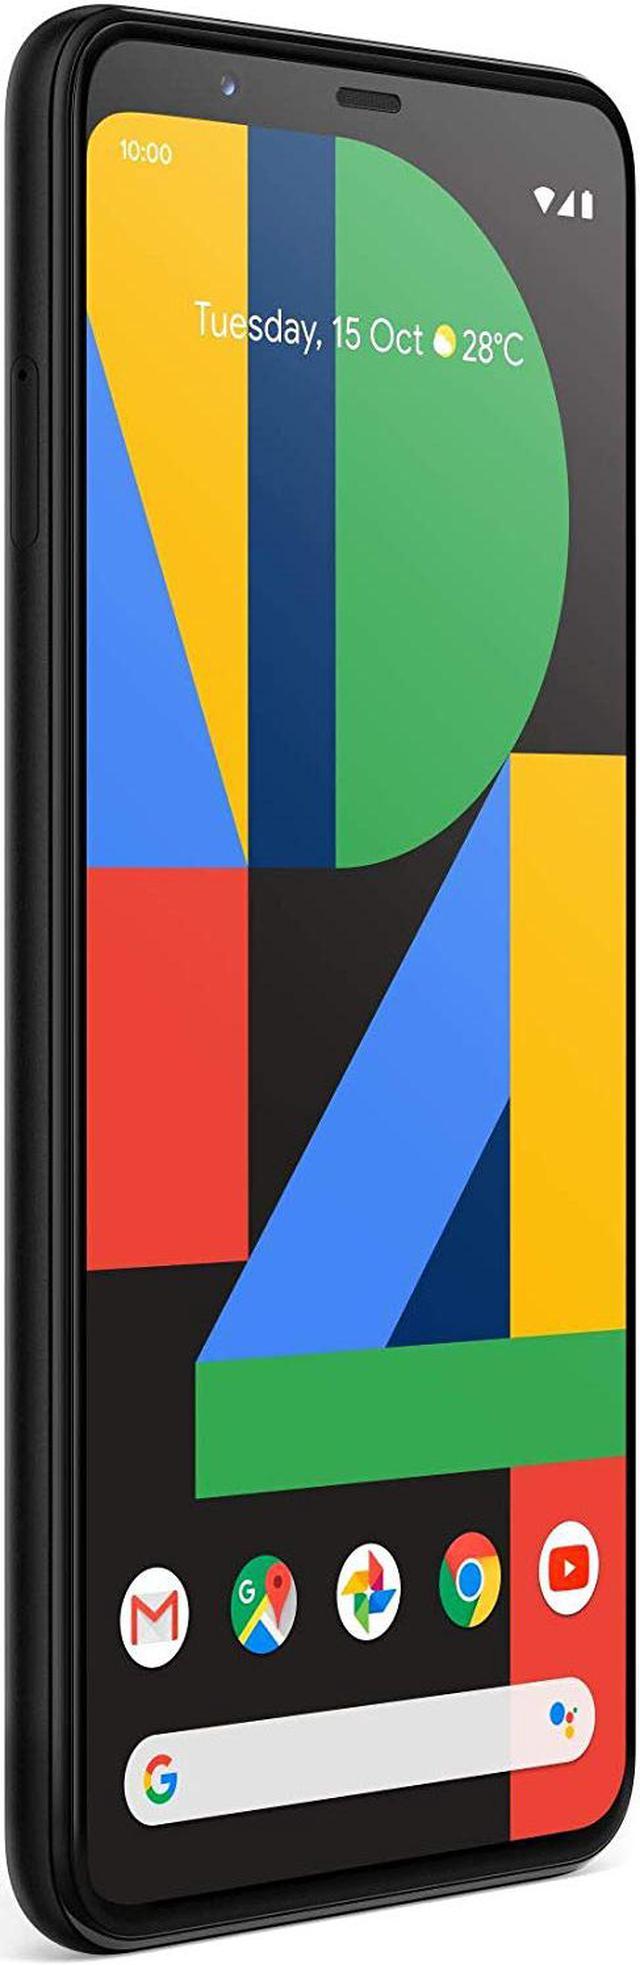 Google Pixel 4 XL - Just Black - 64GB - Unlocked Smart Cell Phone 